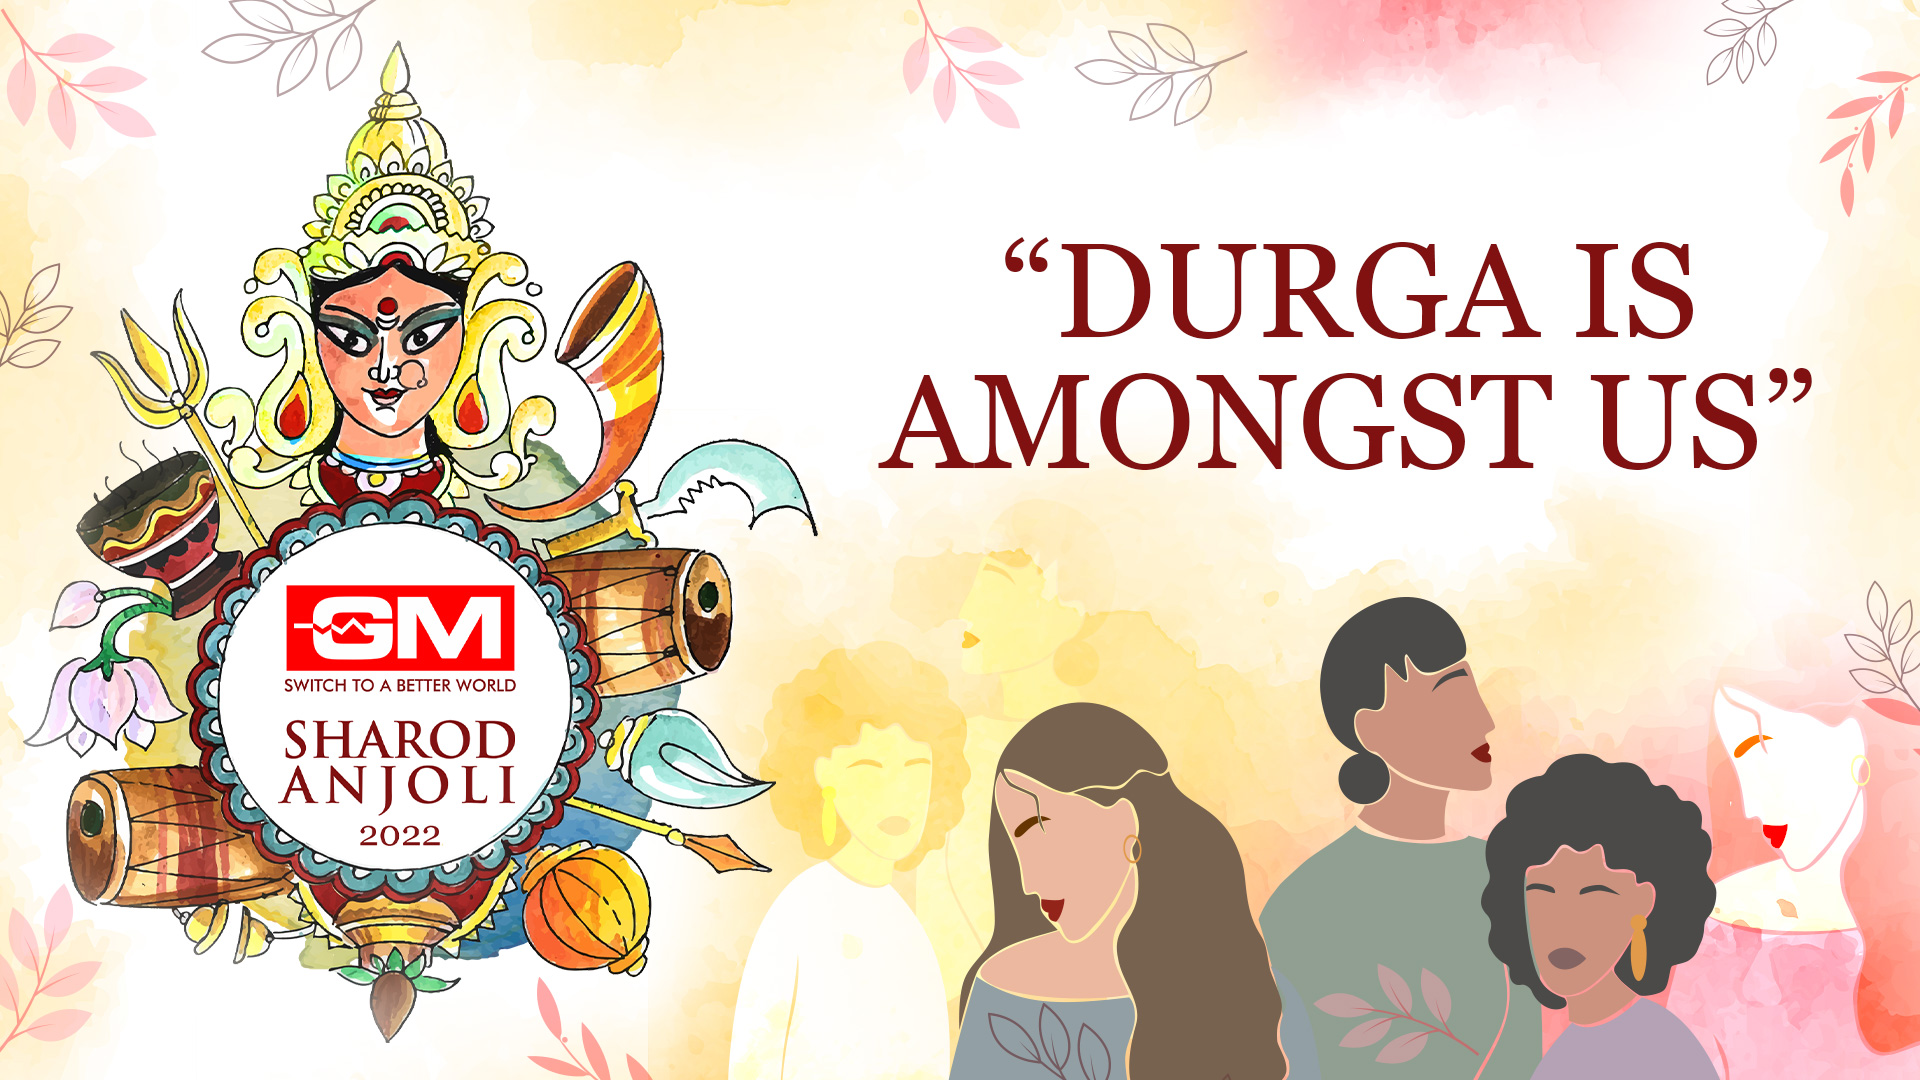 GM Sharod Anjoli 2022 - " Durga Is Amongst Us"